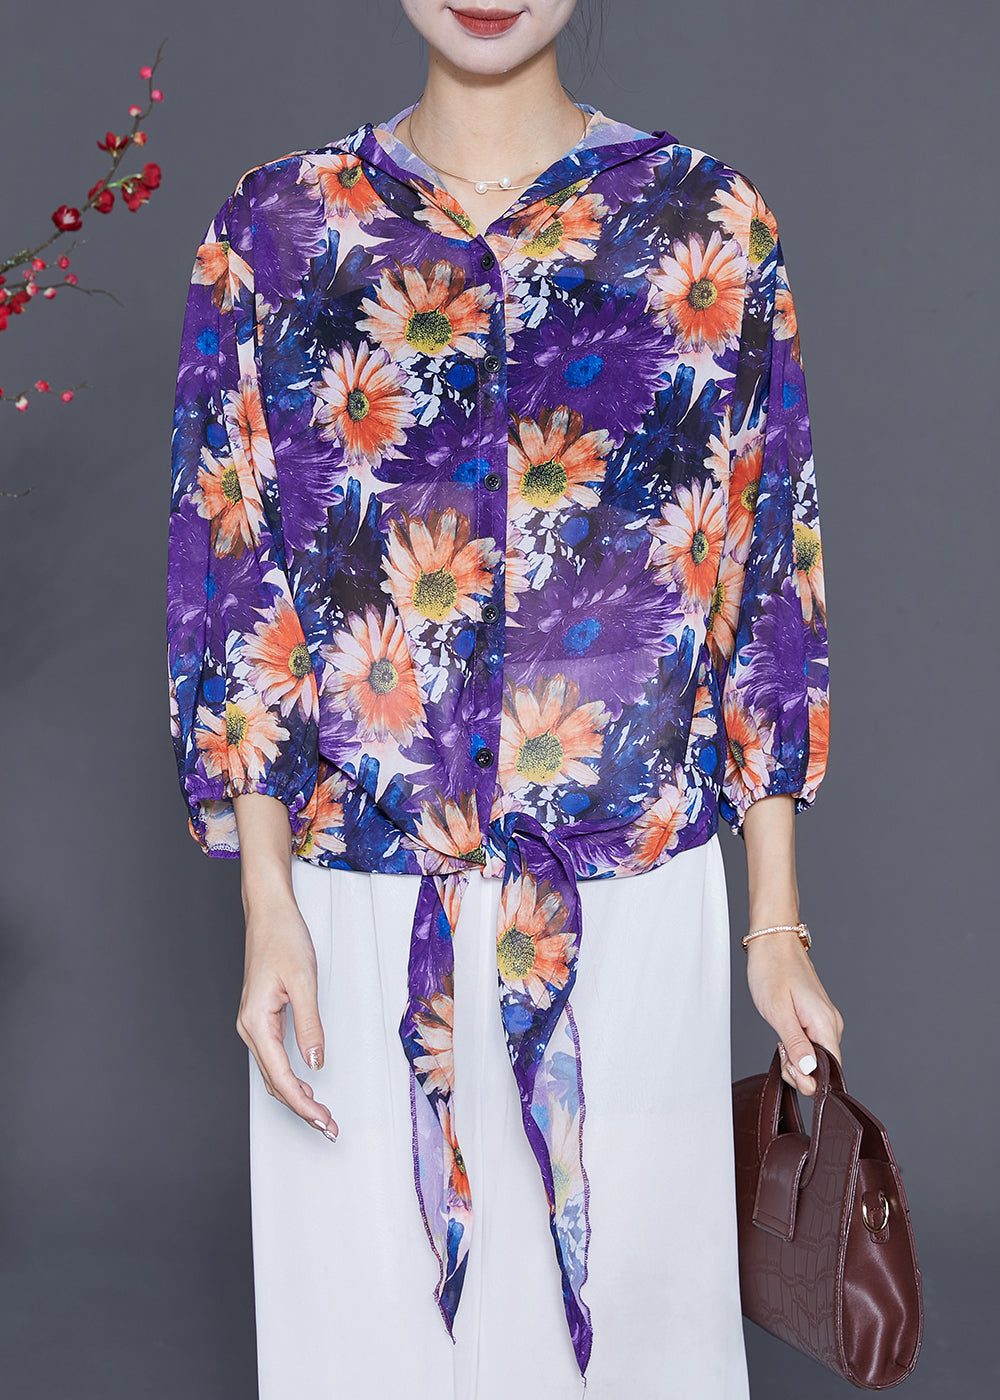 Purple Floral Chiffon UPF 50+ Shirt Top Hooded Summer